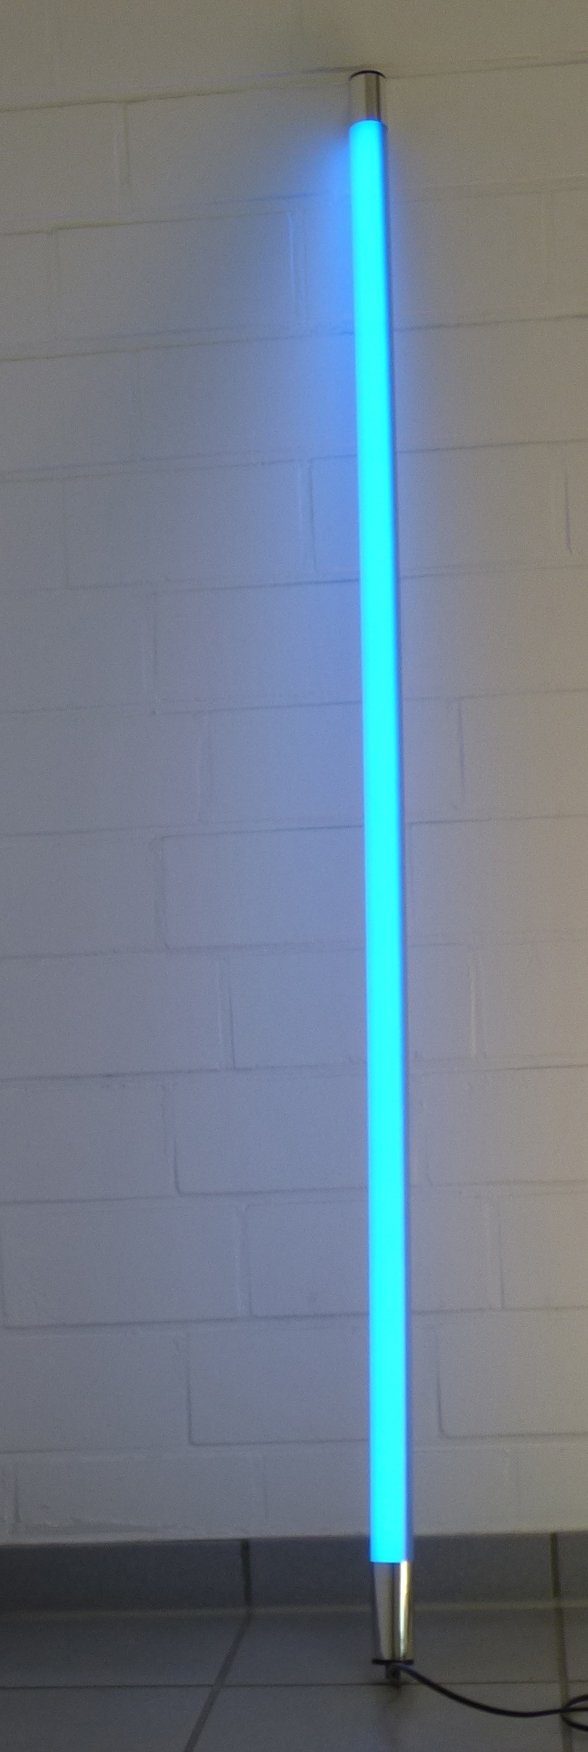 XENON LED Wandleuchte 6469 LED Leuchtstab Satiniert 1,53m Länge 2500 Lumen IP20 Innen Blau, LED Röhre T8, Xenon